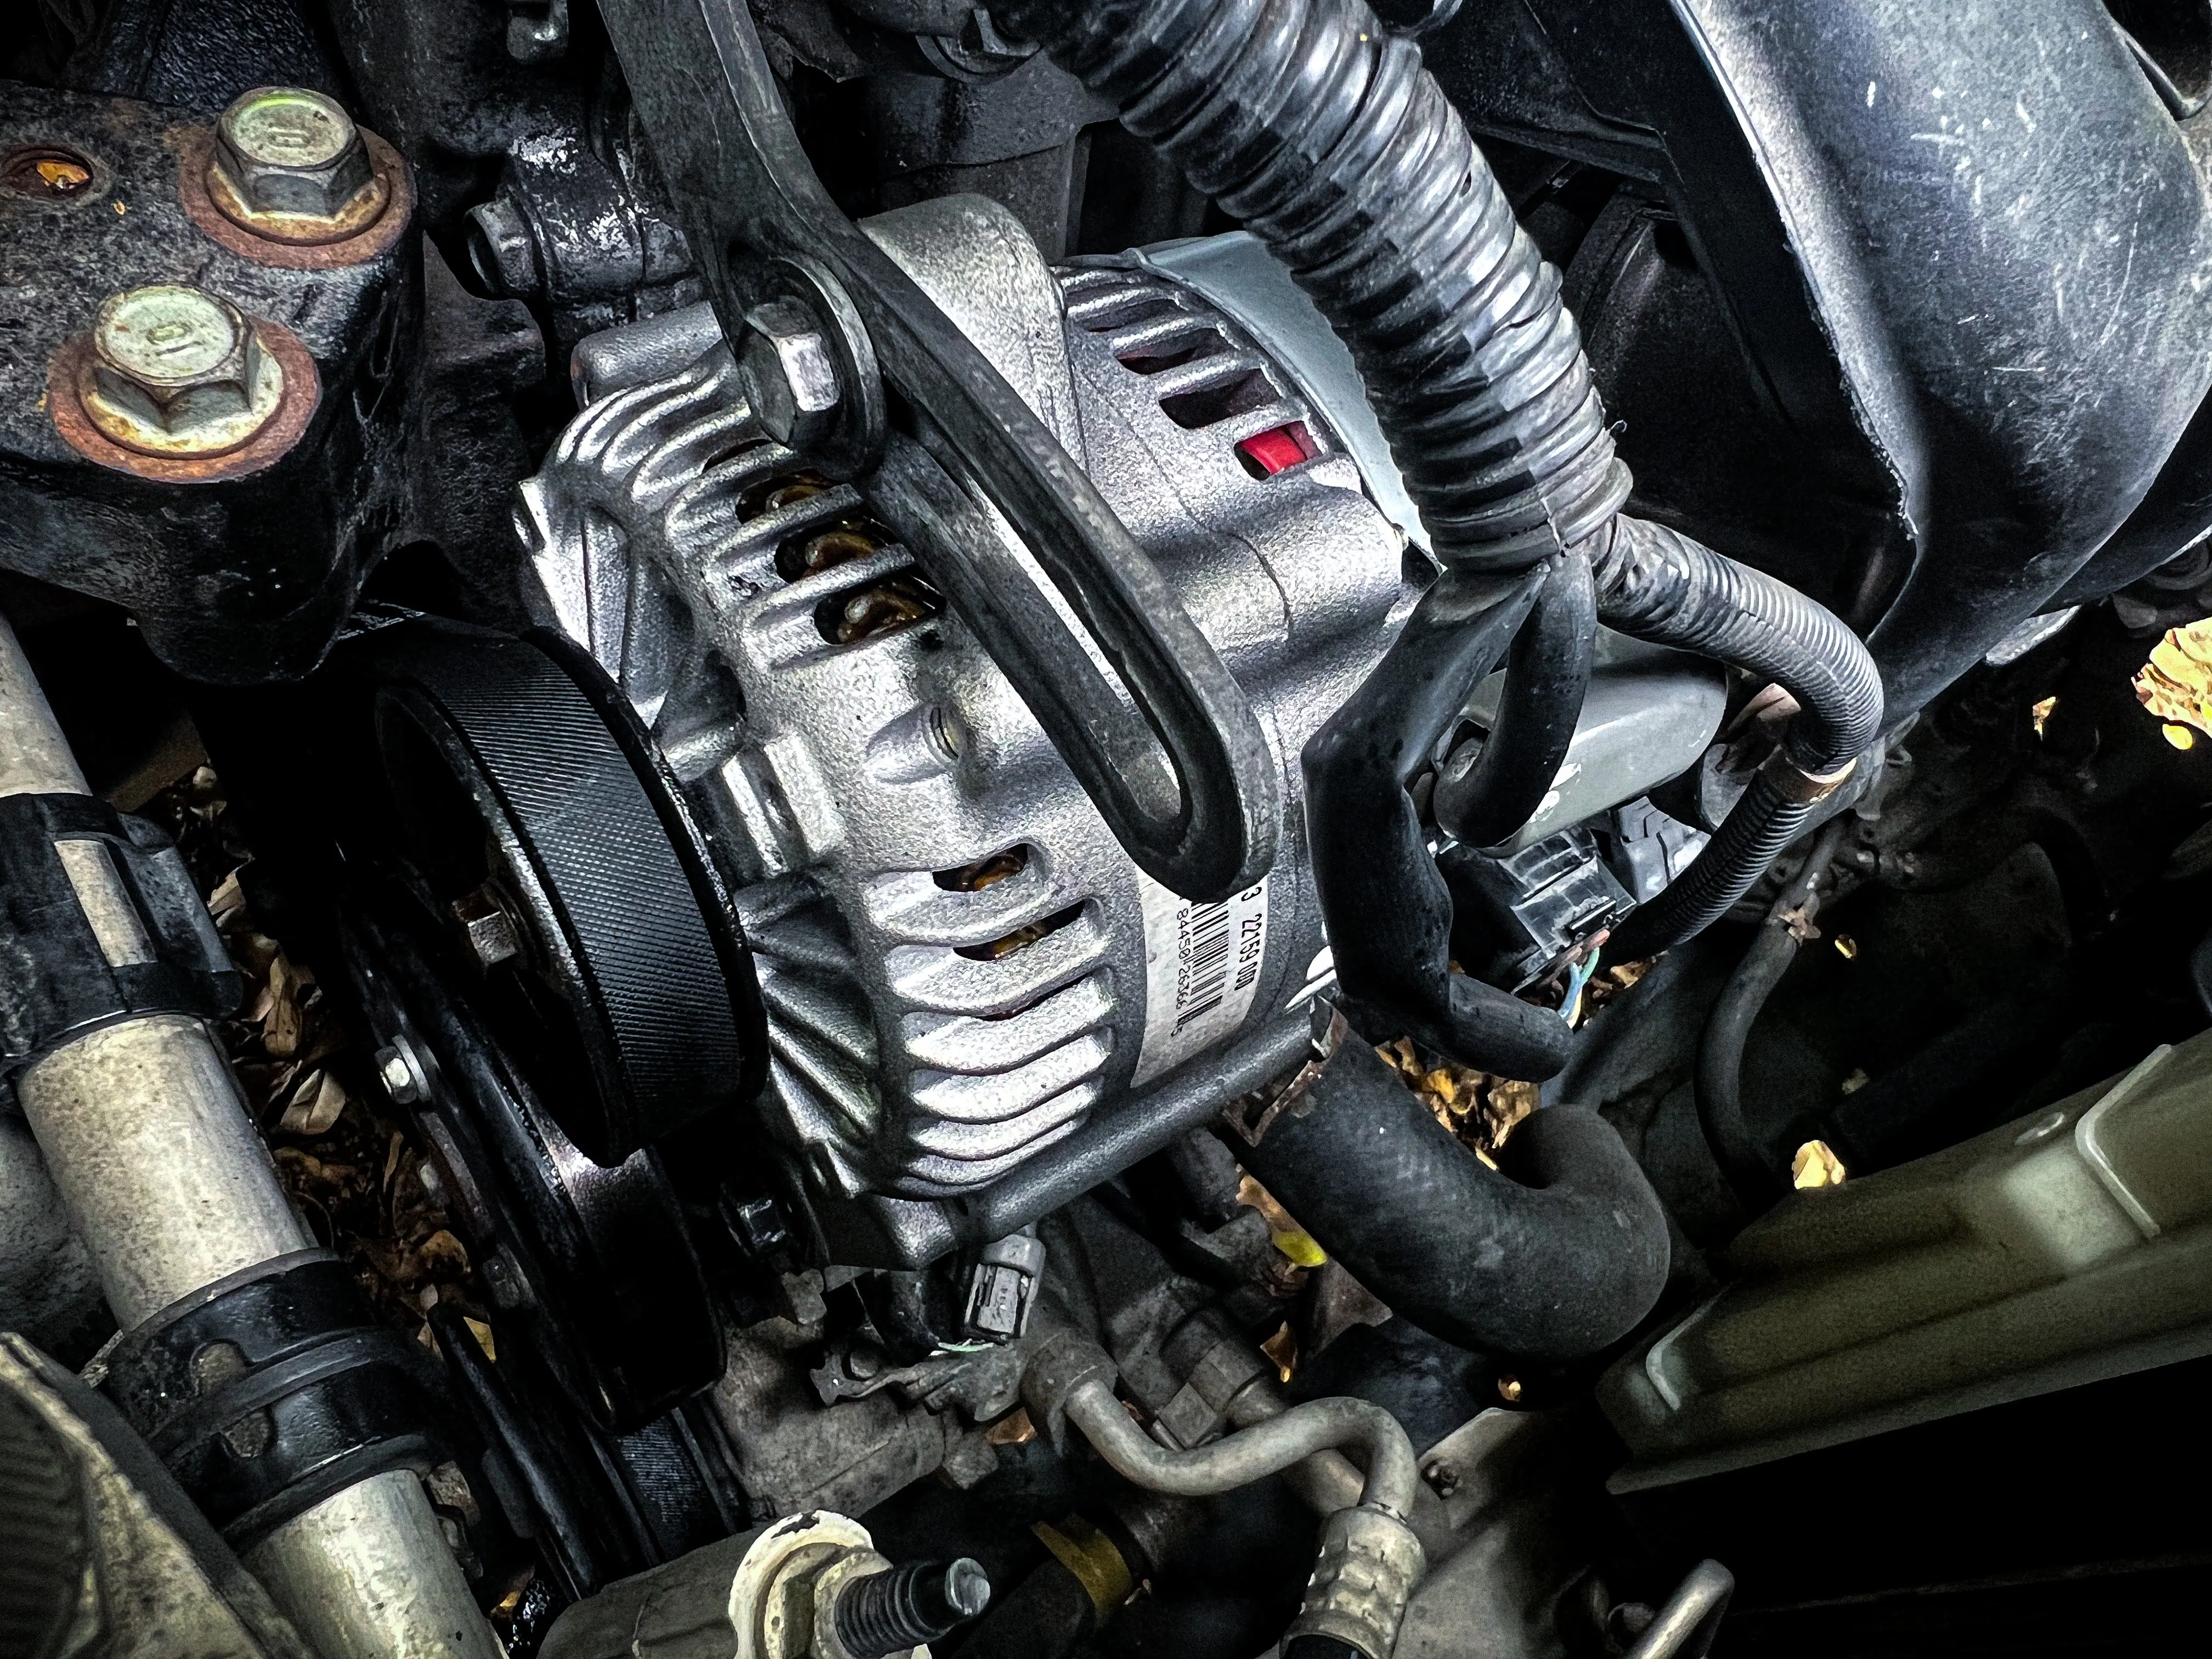 Closeup of an alternator